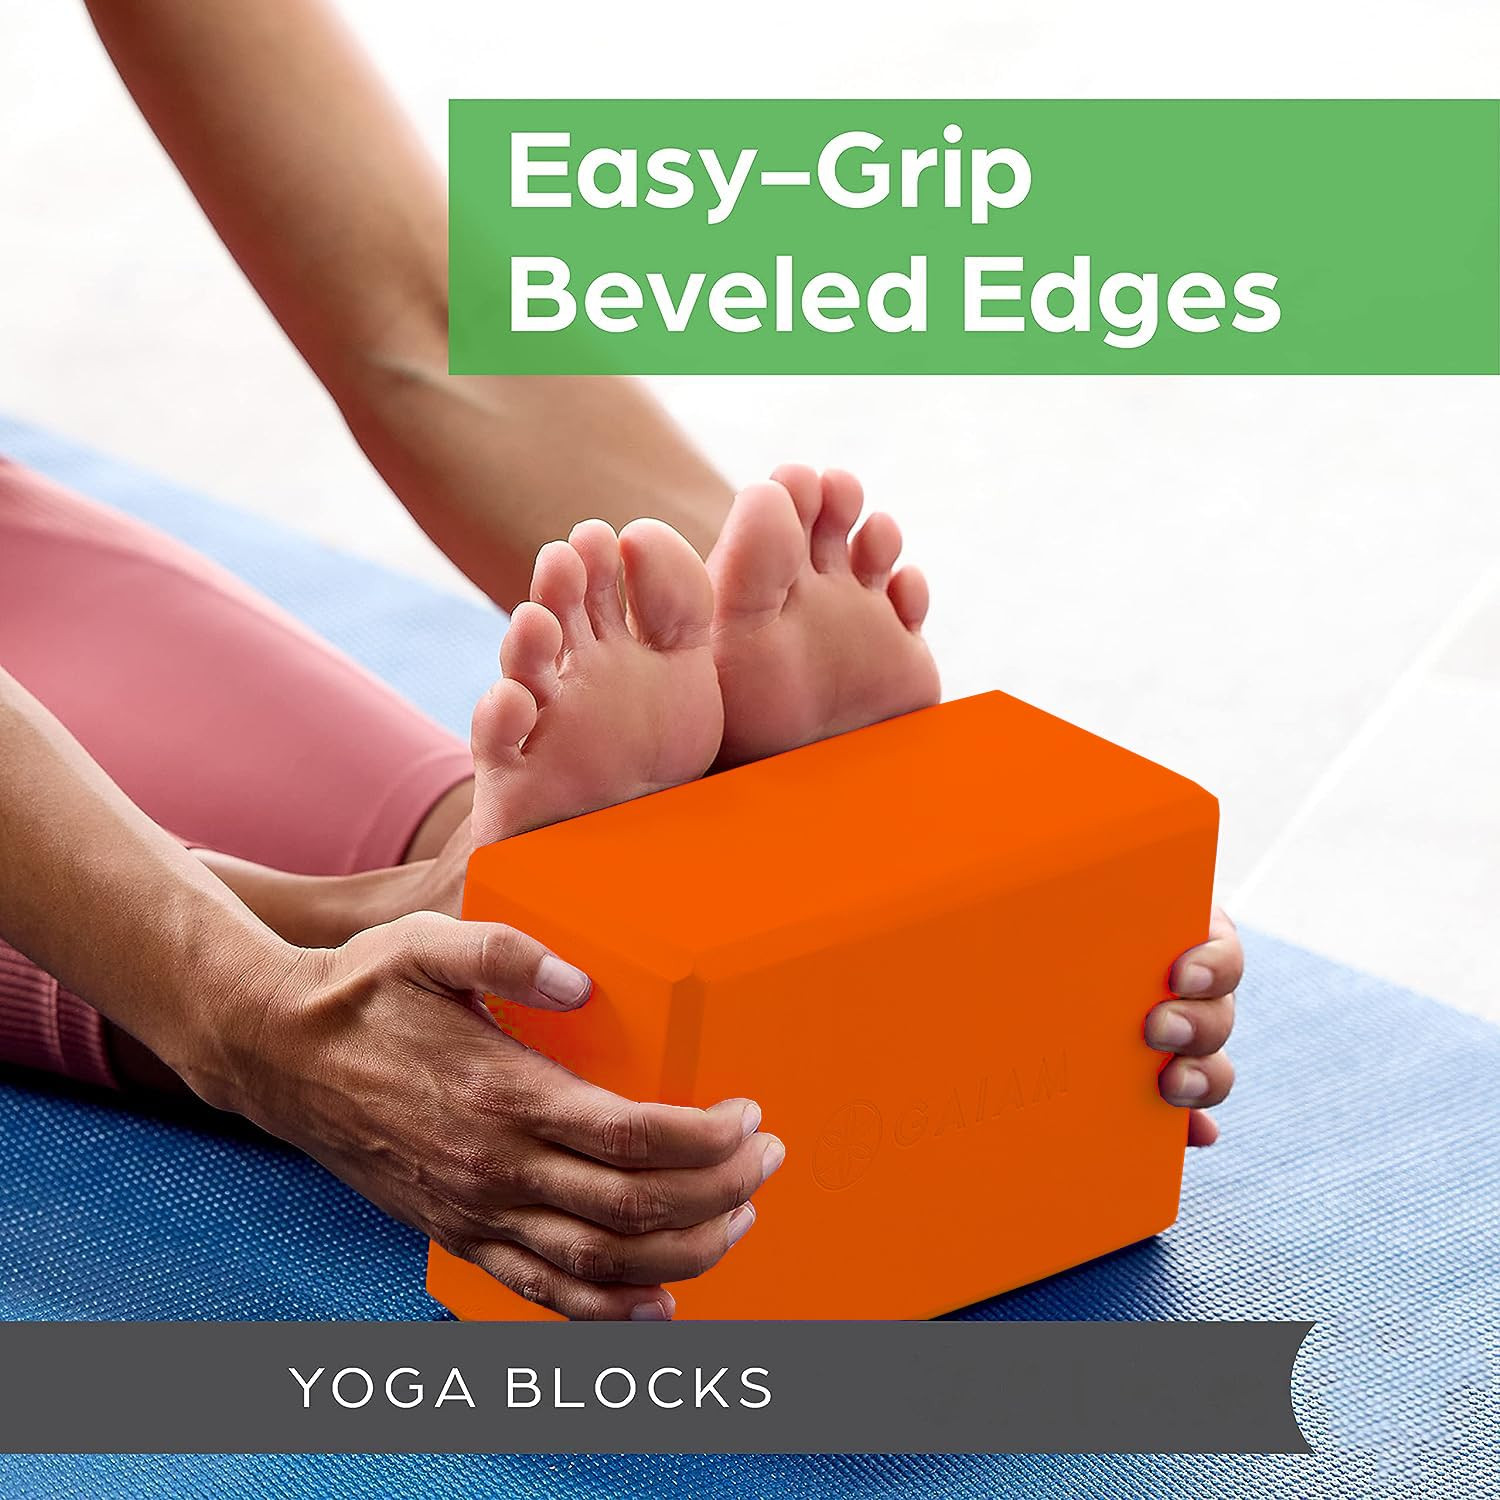 Kuber Industries High-Density Yoga Block|Lightweight & Portable Yoga Brick|Improve Strength & Flexibility (Orange)